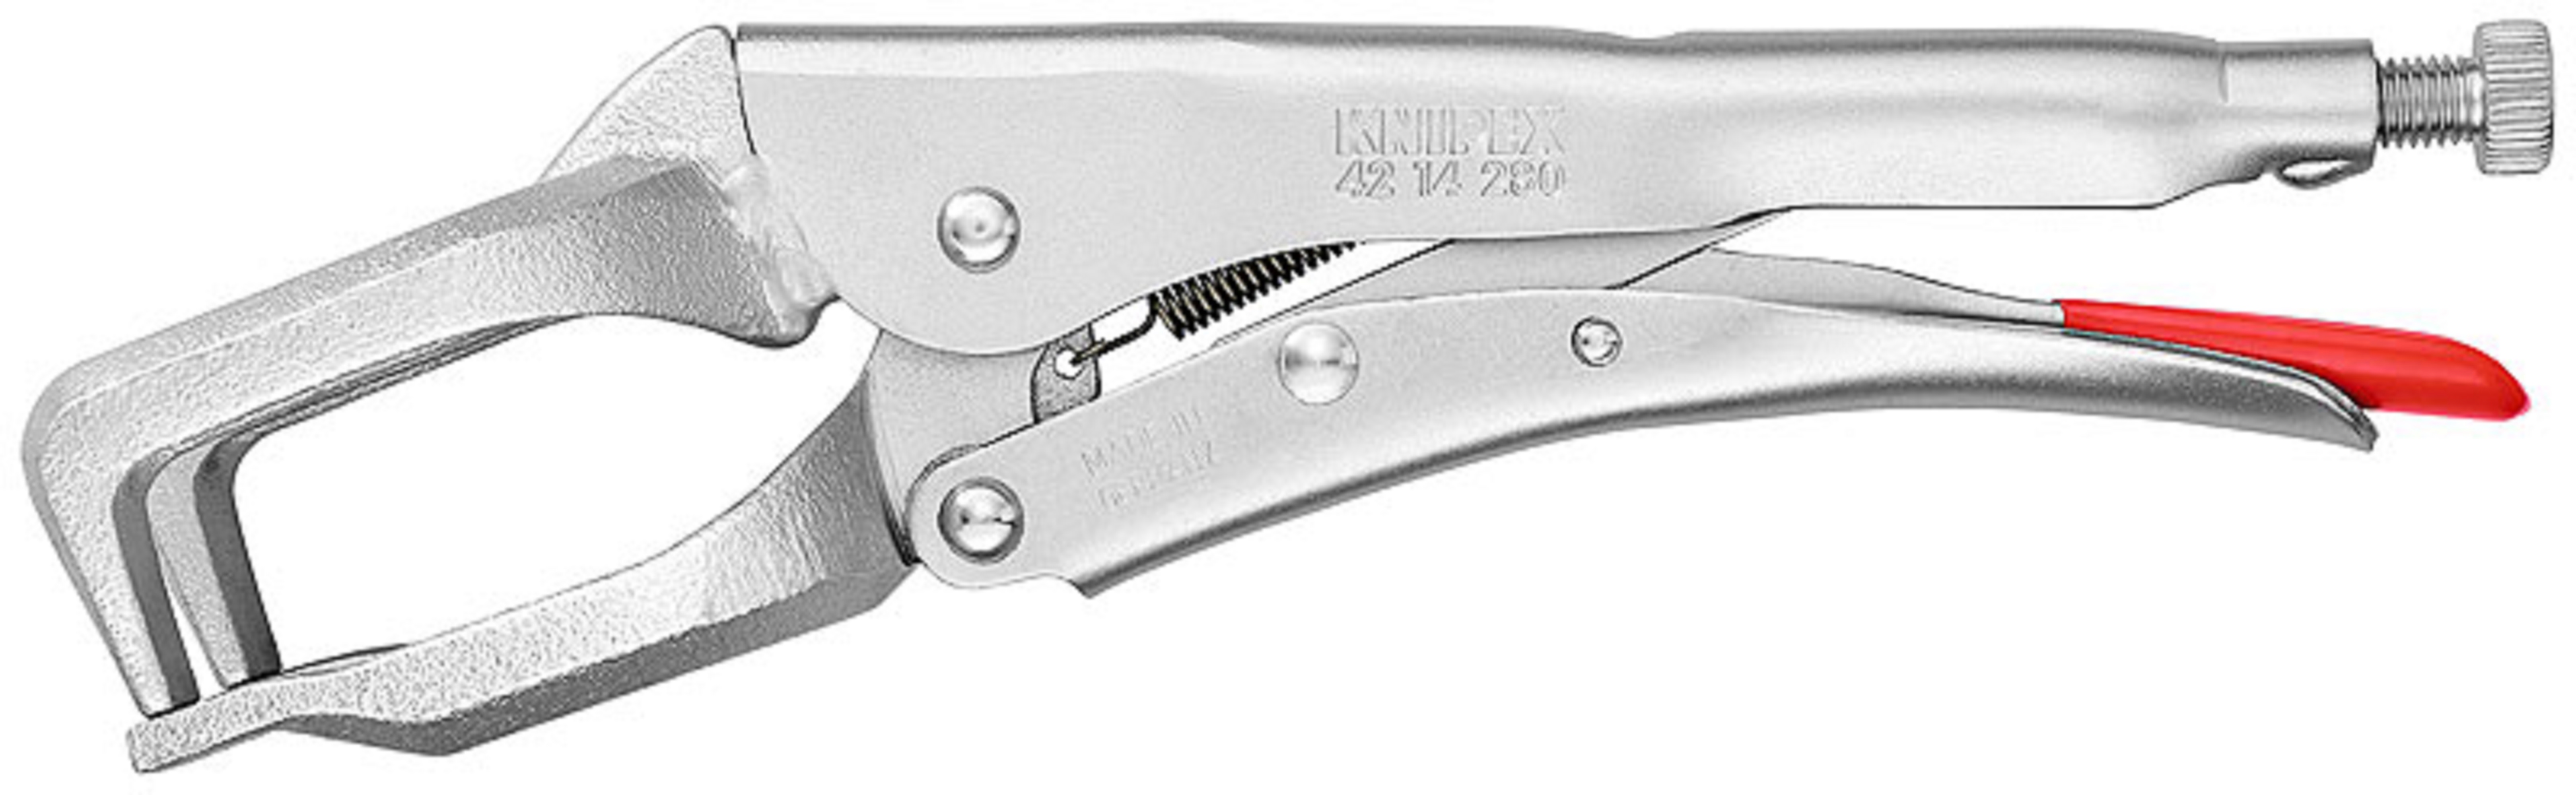 Knipex las klemtang 280mm - 4214280